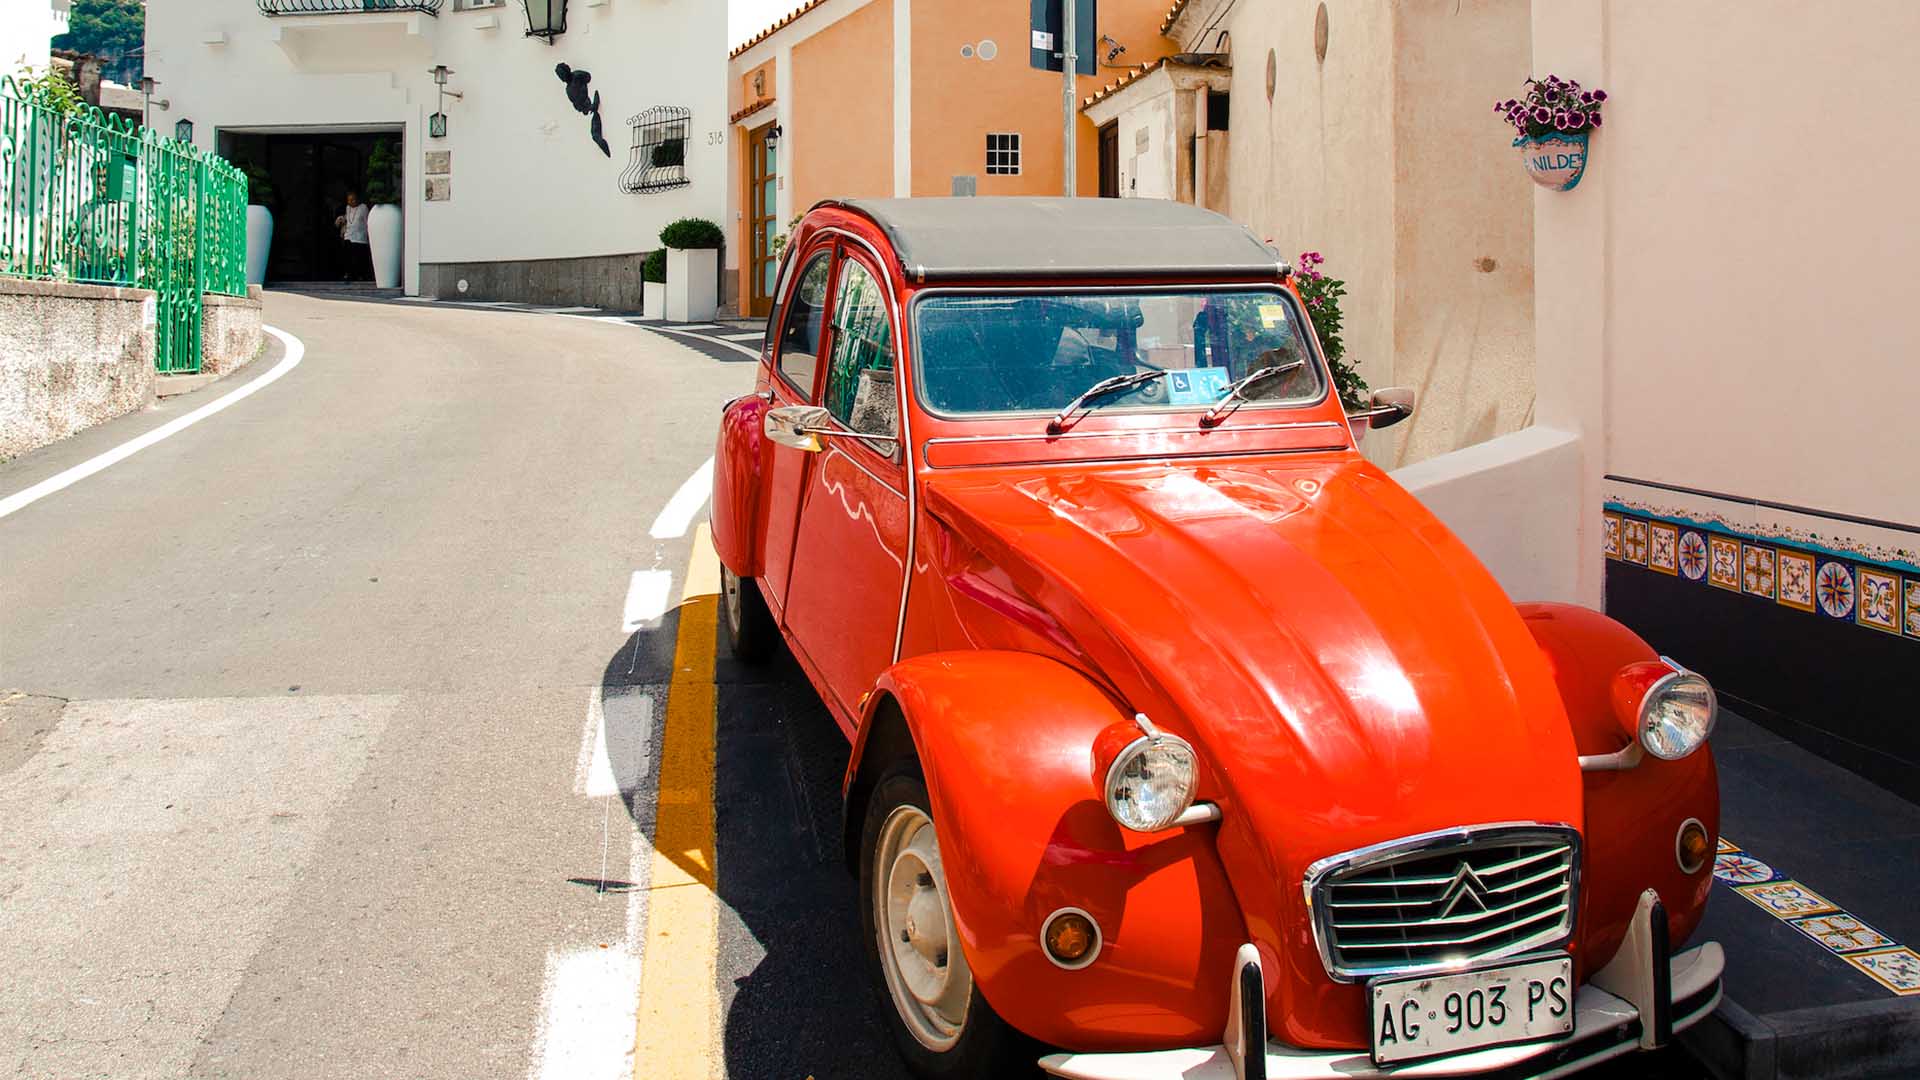 How to plan a romantic road trip around the Amalfi Coast